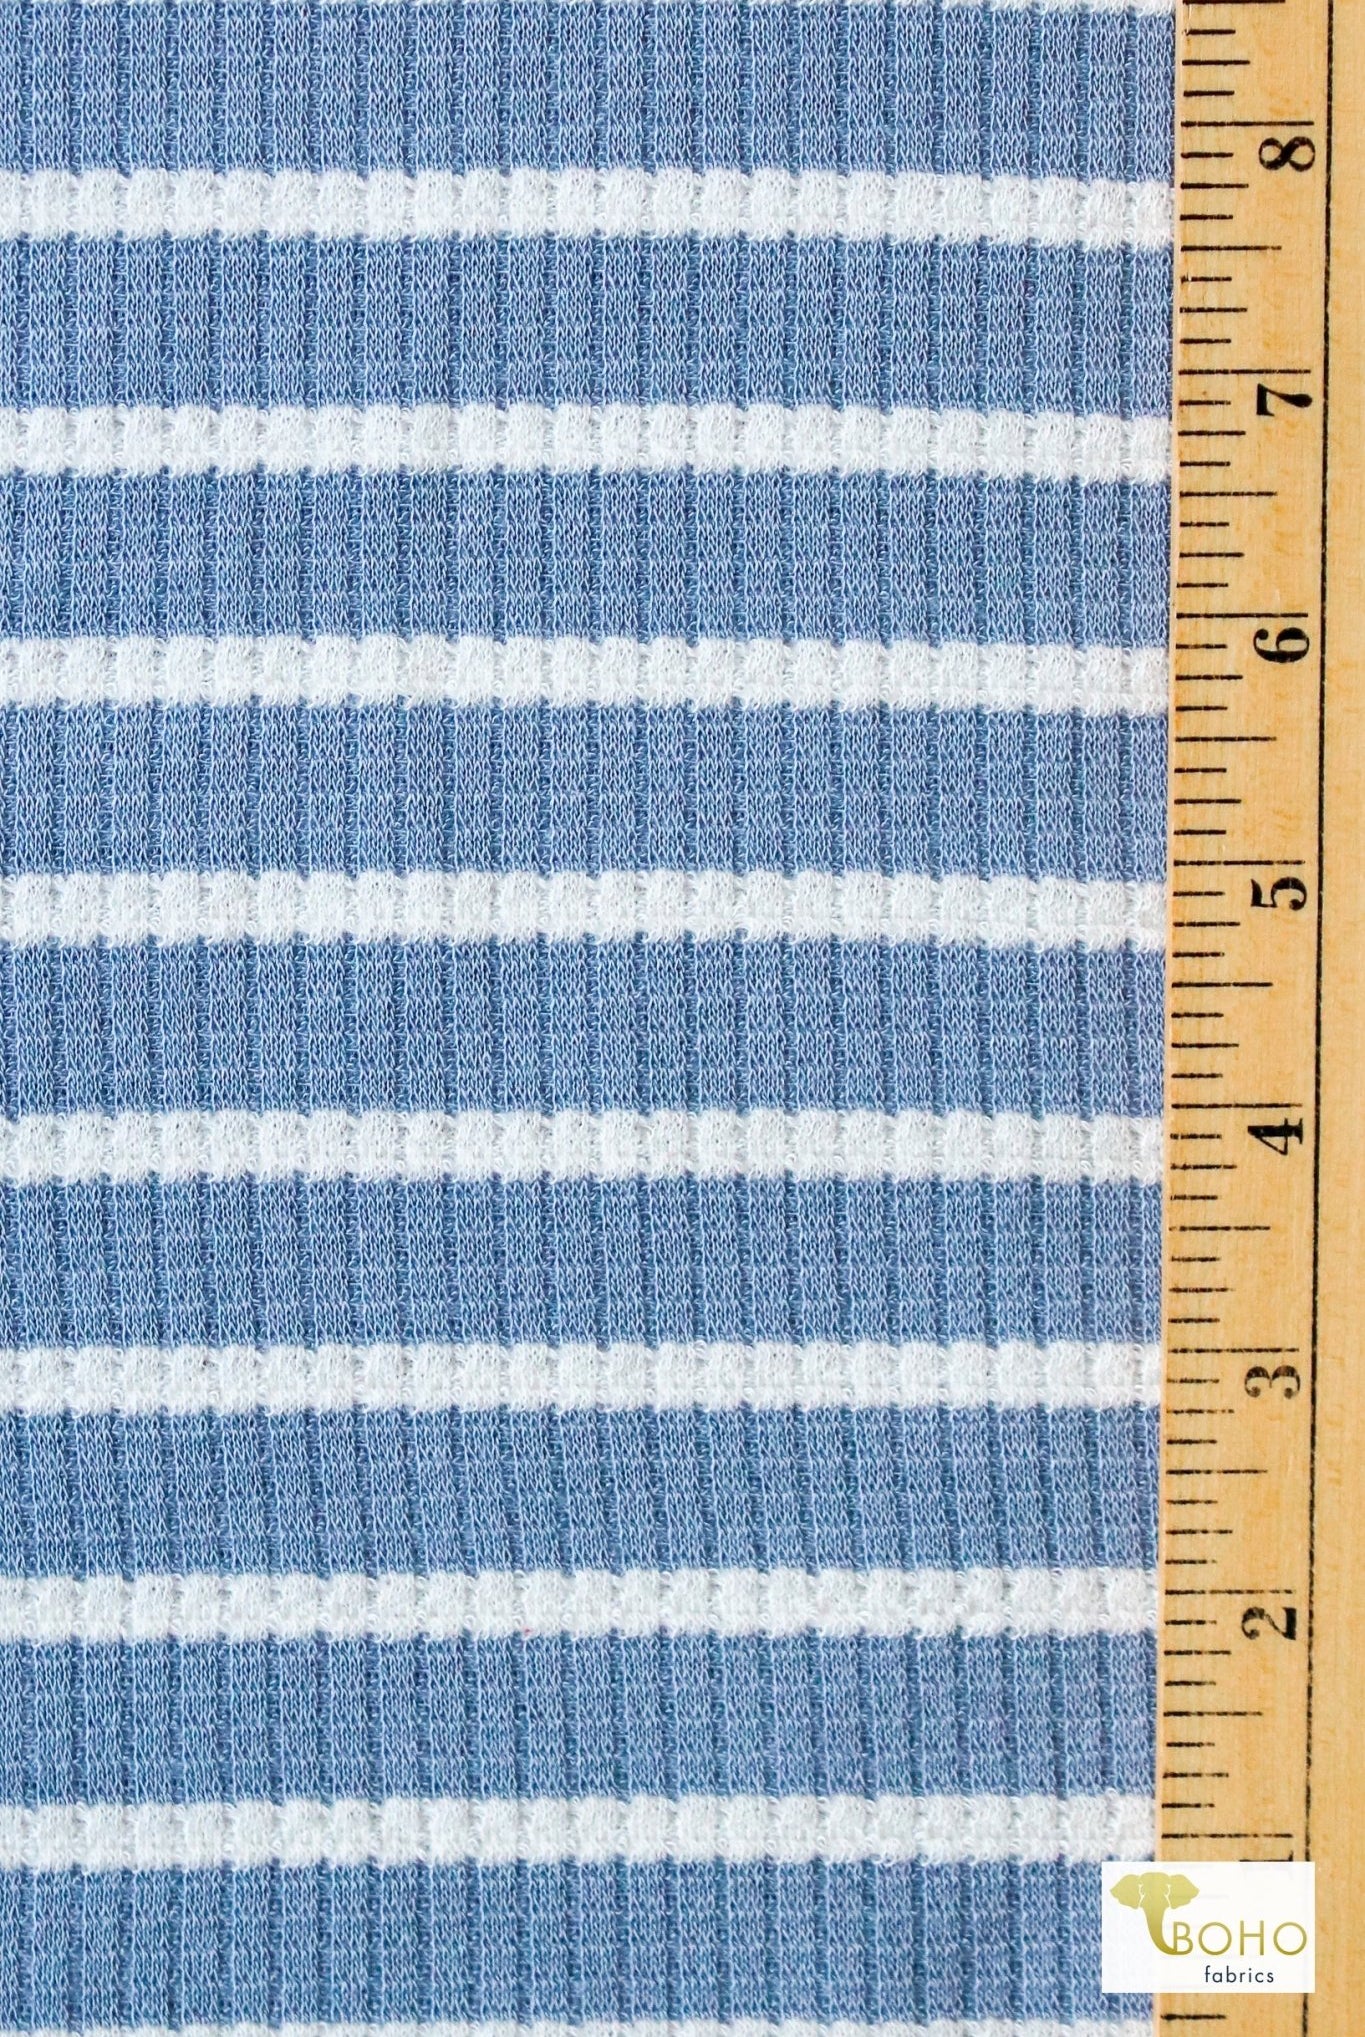 Blue Stripes Pointelle, Rib Knit - Boho Fabrics